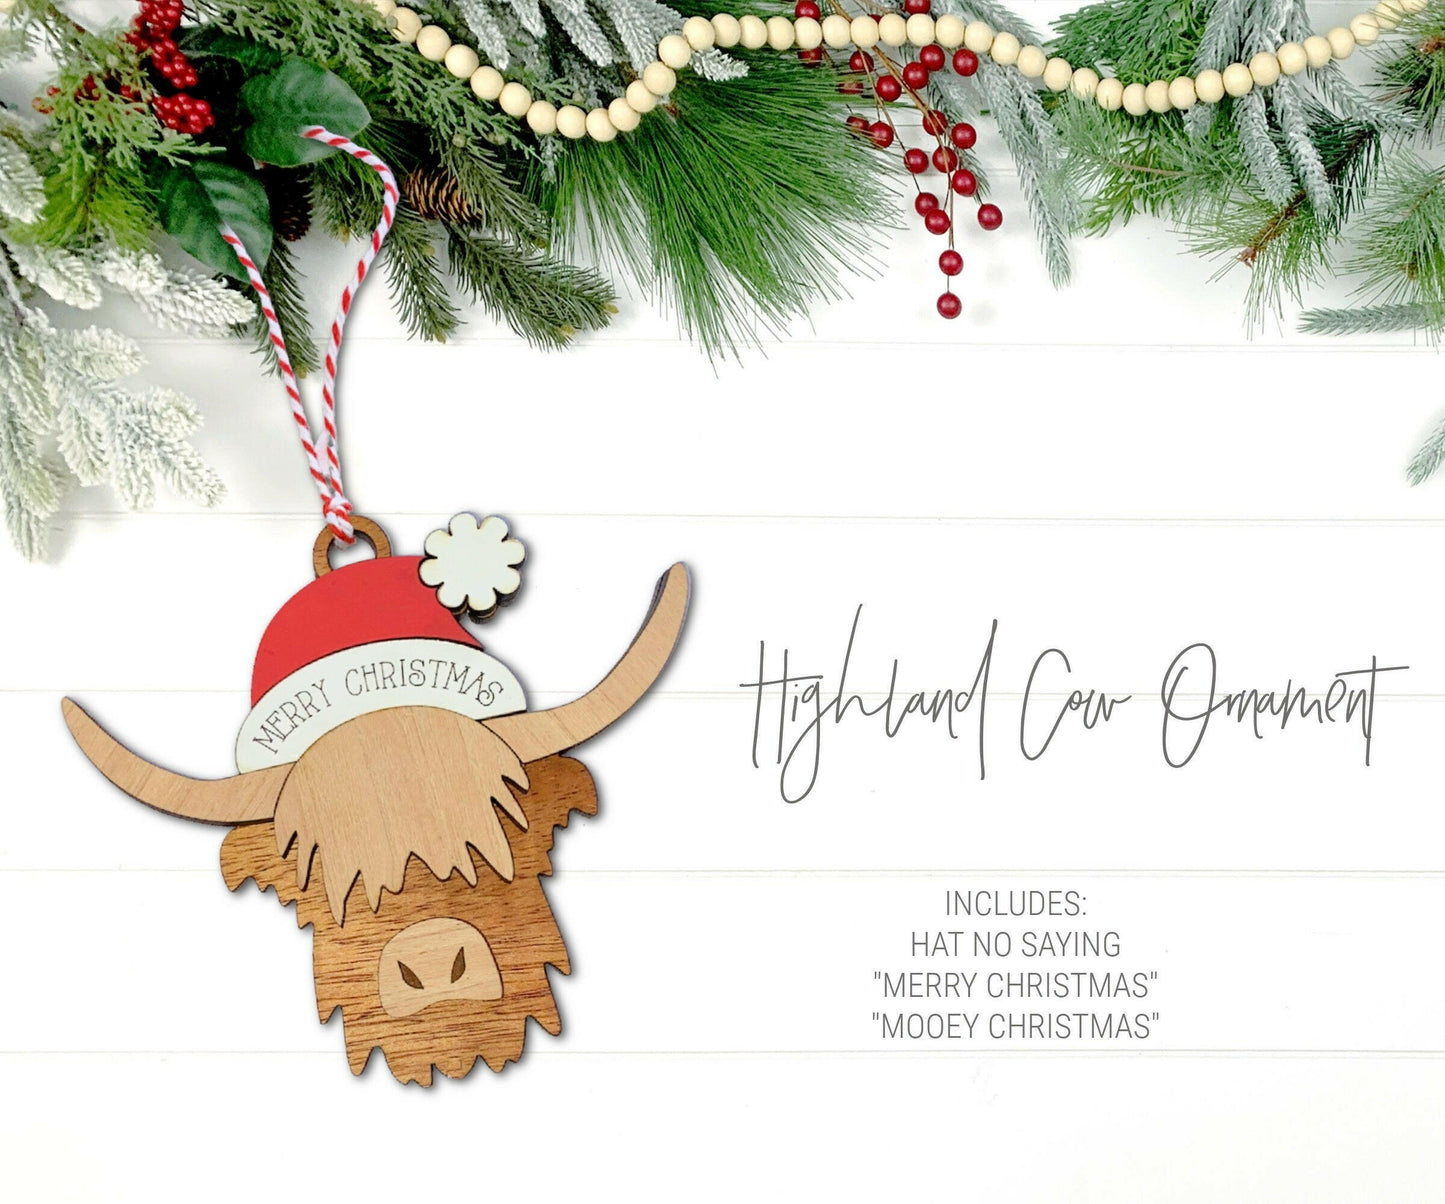 Highland Cow Ornament SVG, Farmhouse Ornament SVG, Christmas Highland Cow Ornament, Christmas Highland Cow Ornaments, Cow Tag SVG